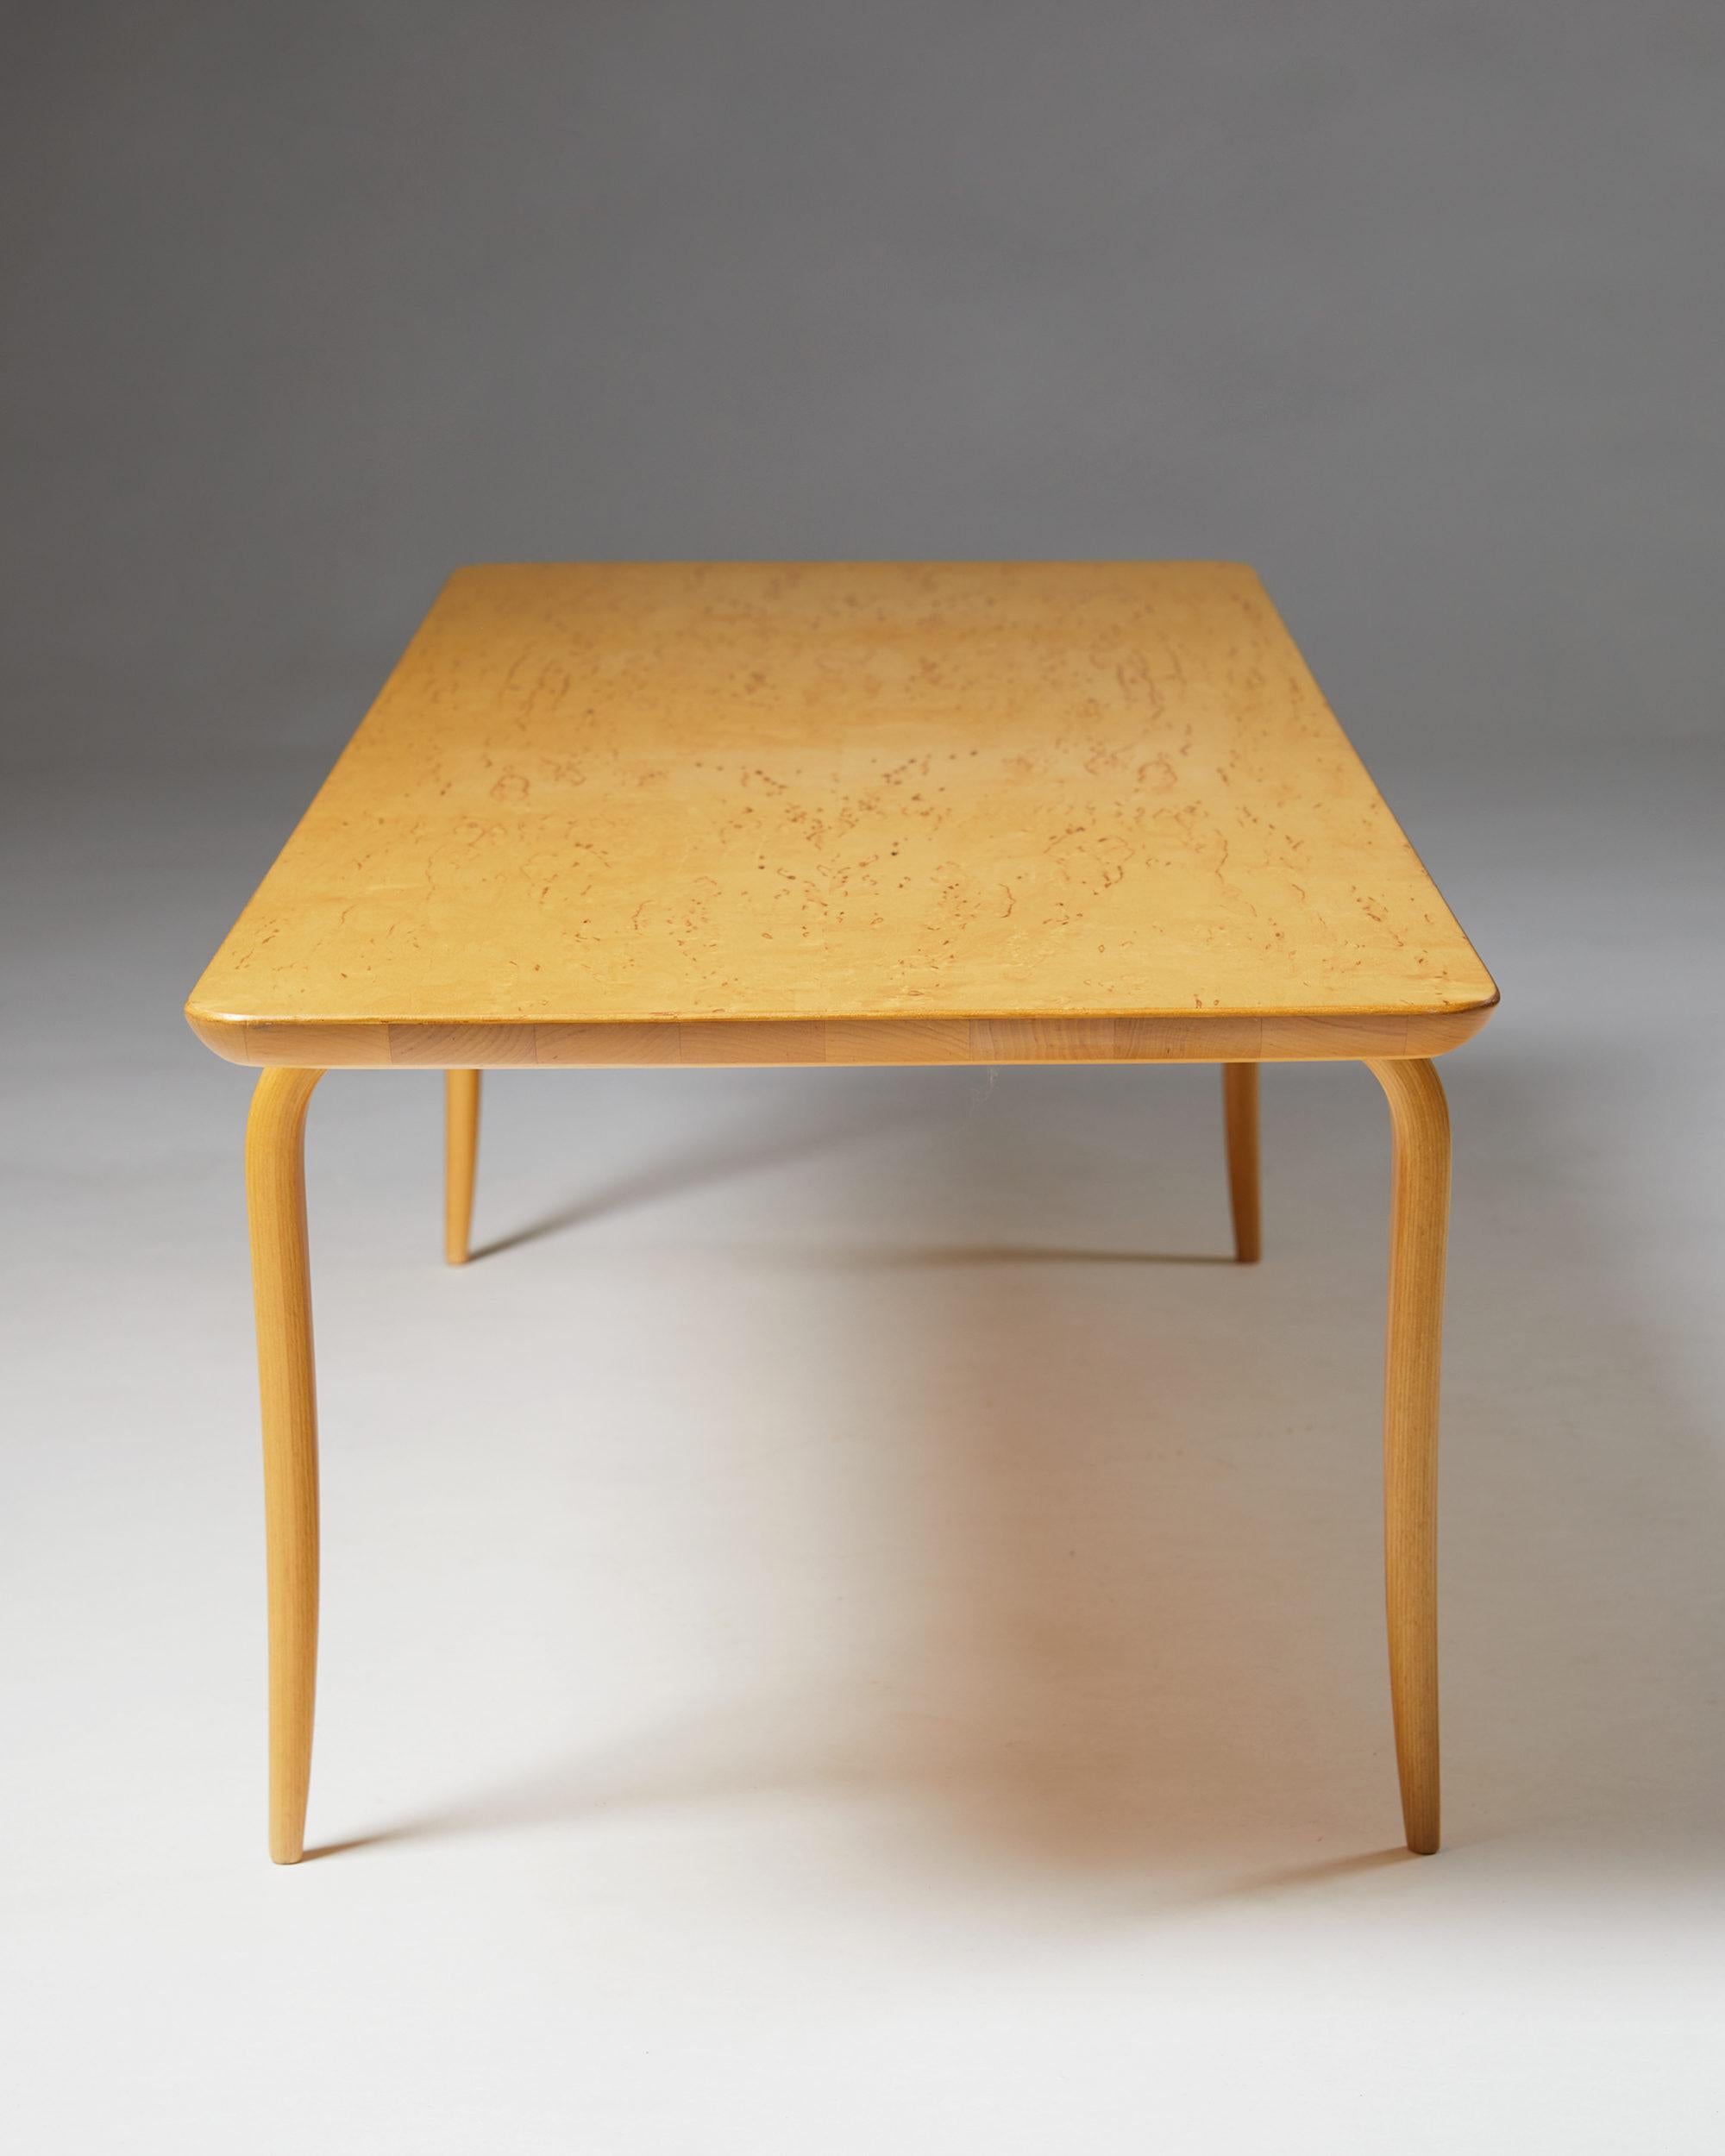 Swedish Bench/Coffee Table “Annika” Designed by Bruno Mathsson